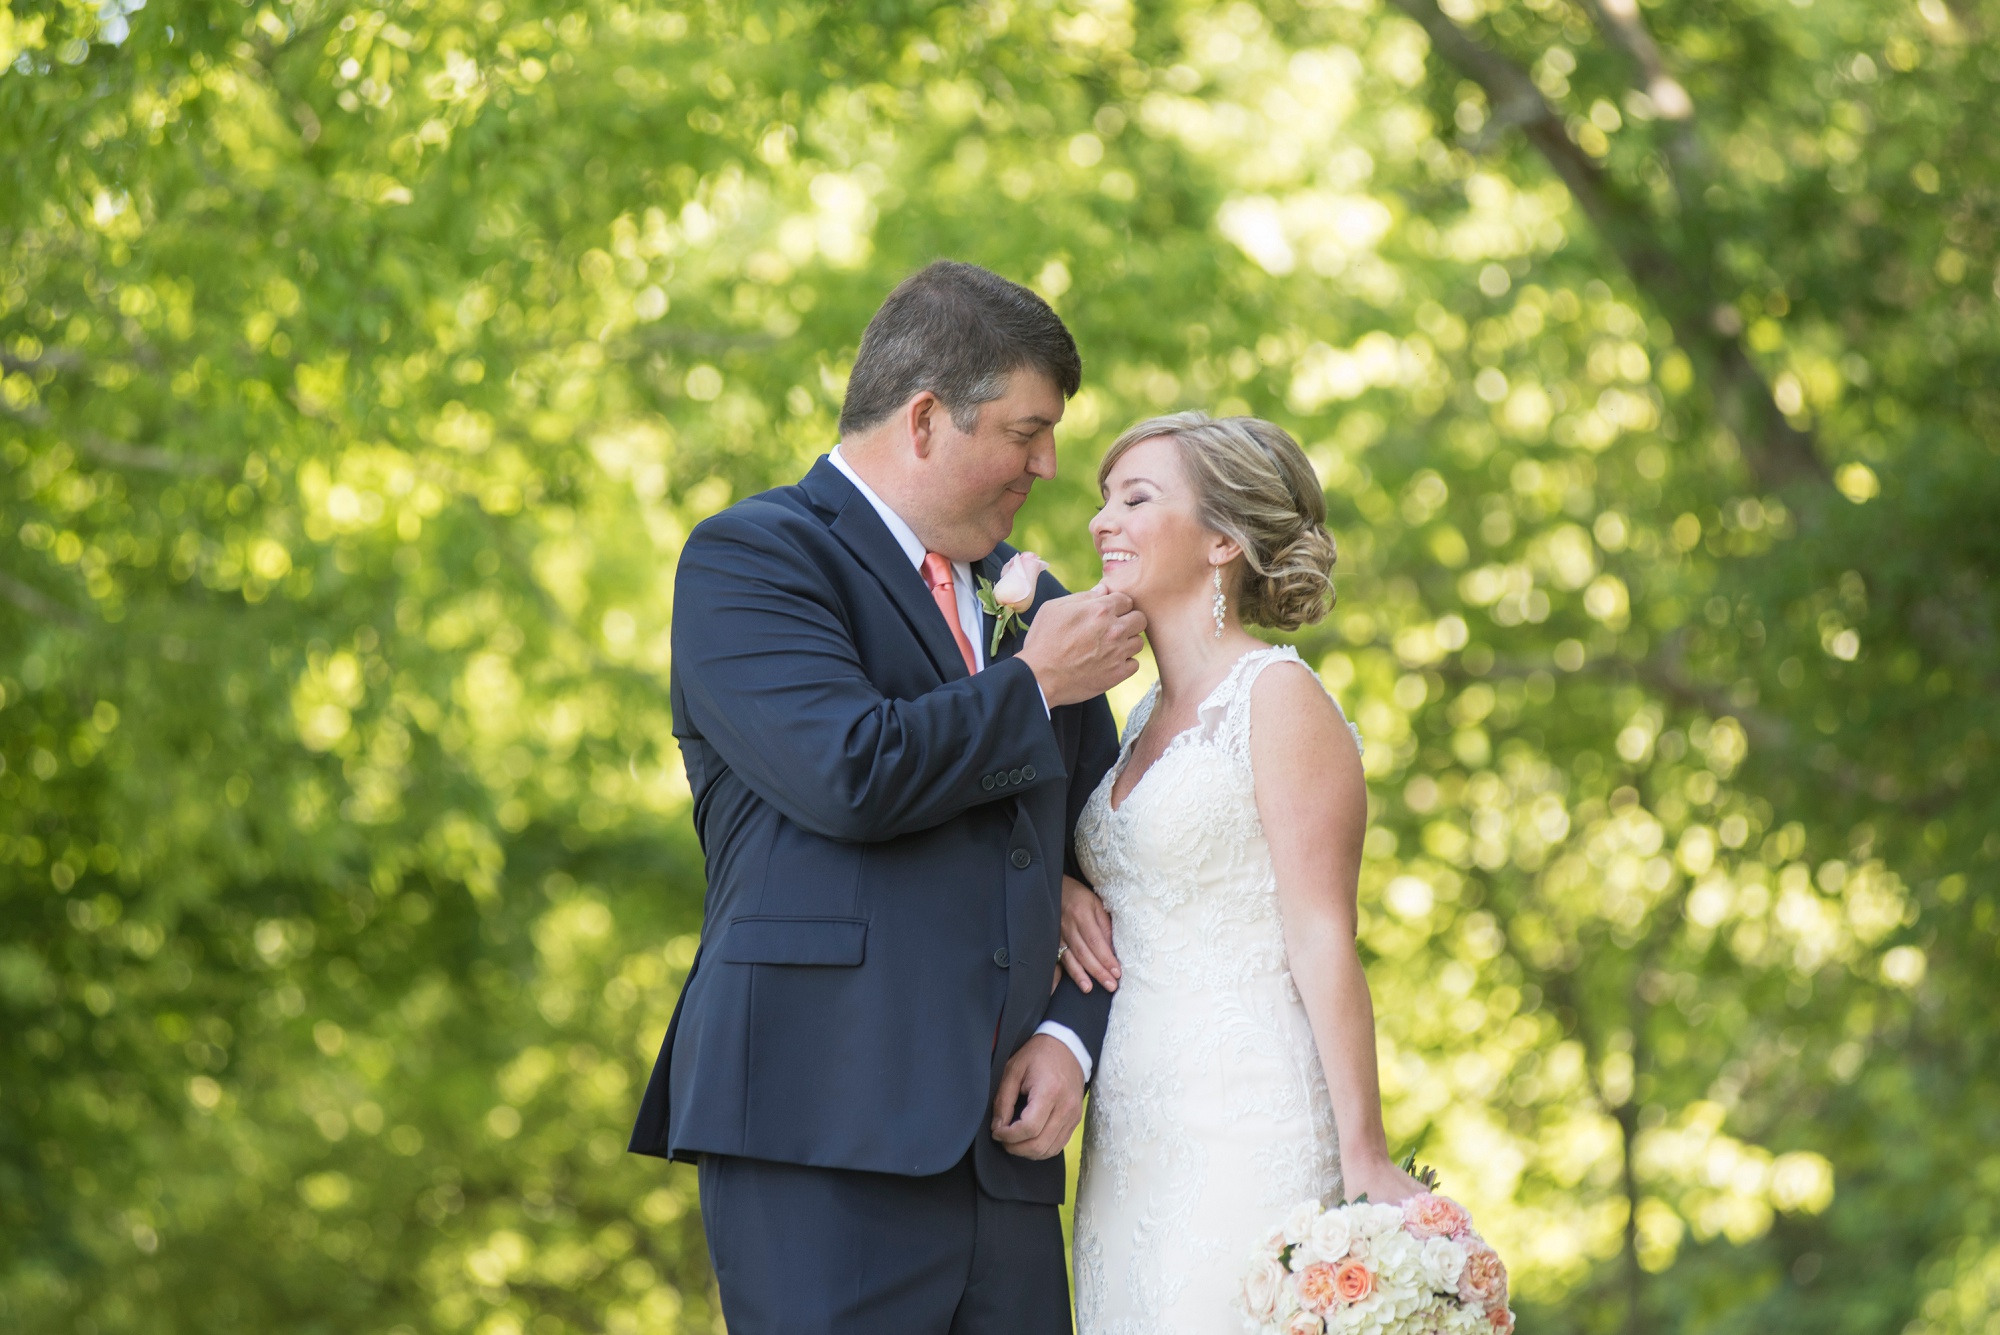 Nashville TN Engagement & Wedding Photographer - IvoryDoorStudio.com - Pat & Mahlia Dooley